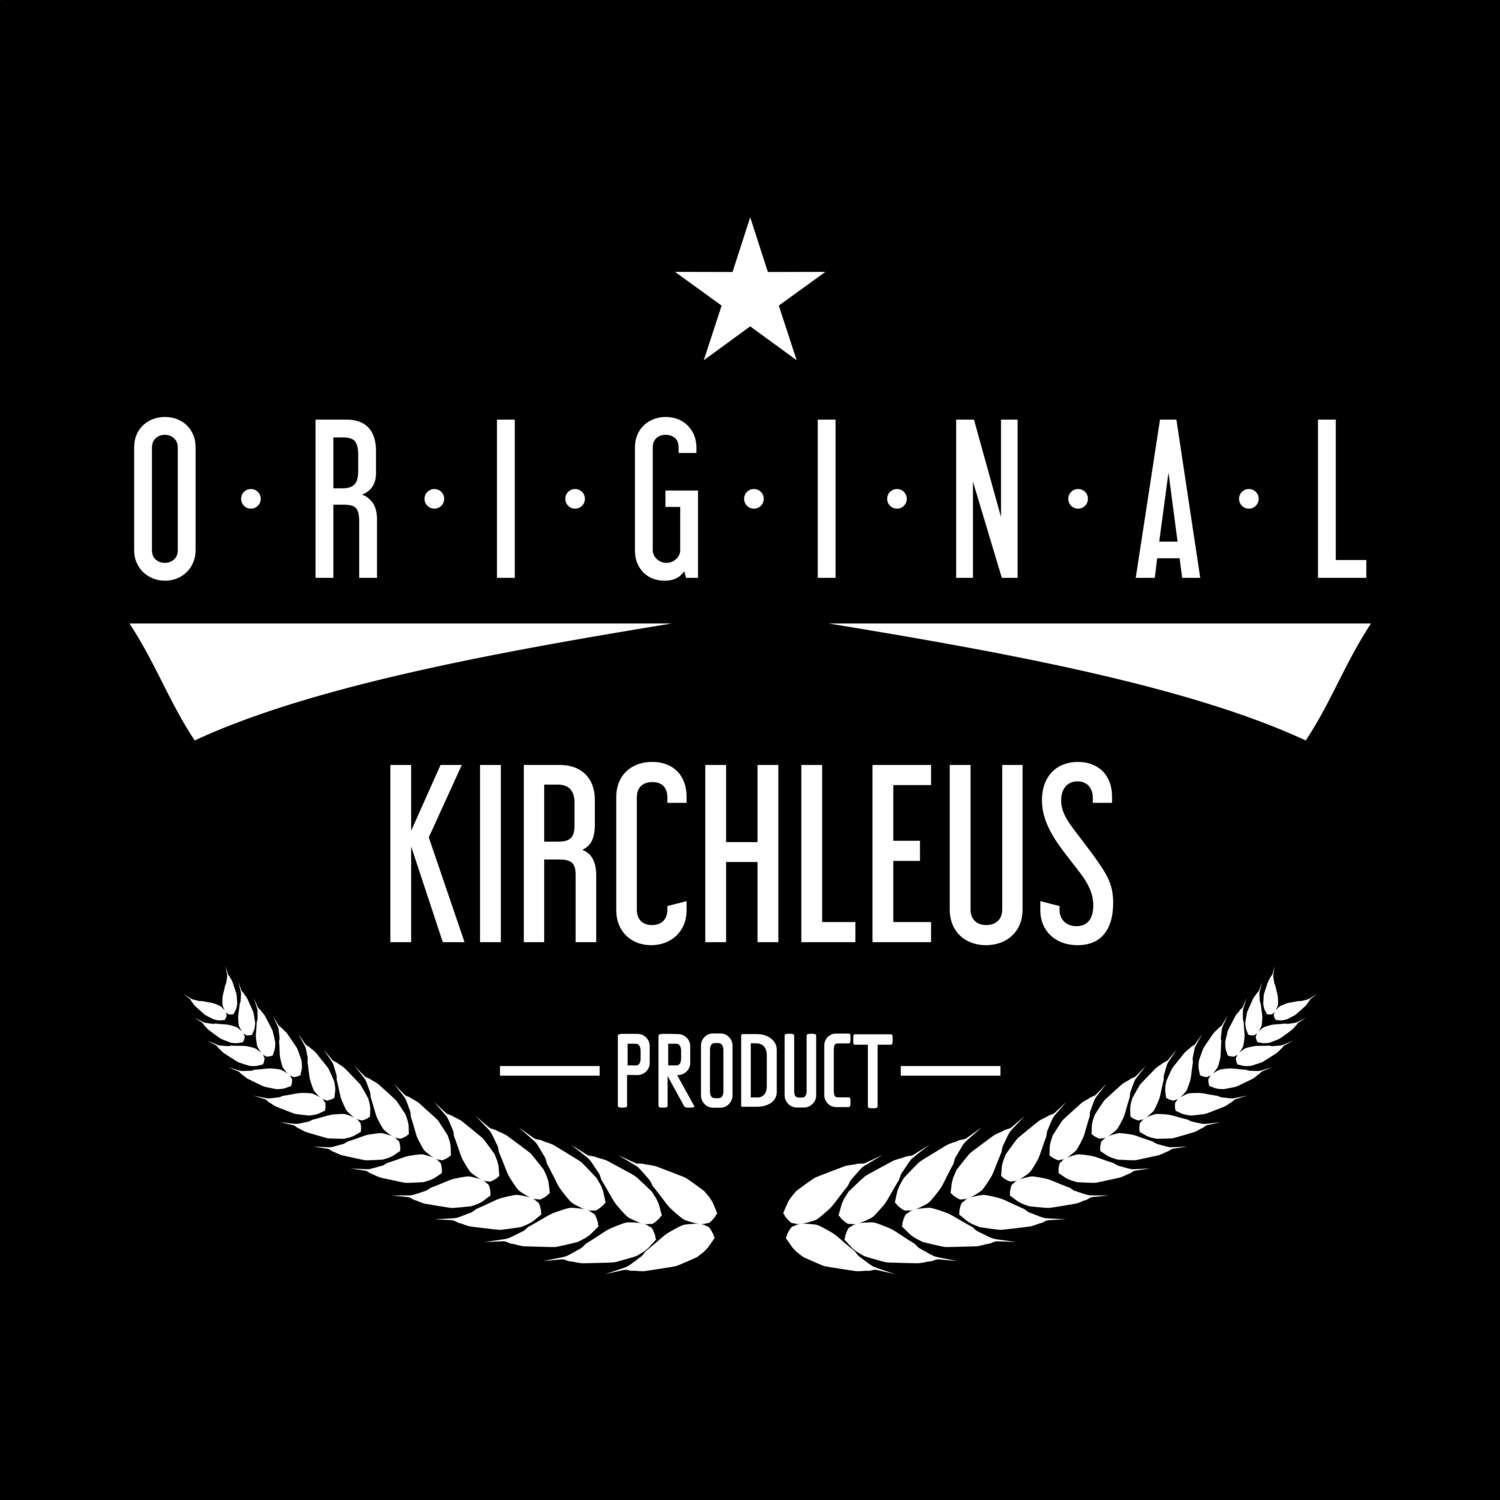 Kirchleus T-Shirt »Original Product«